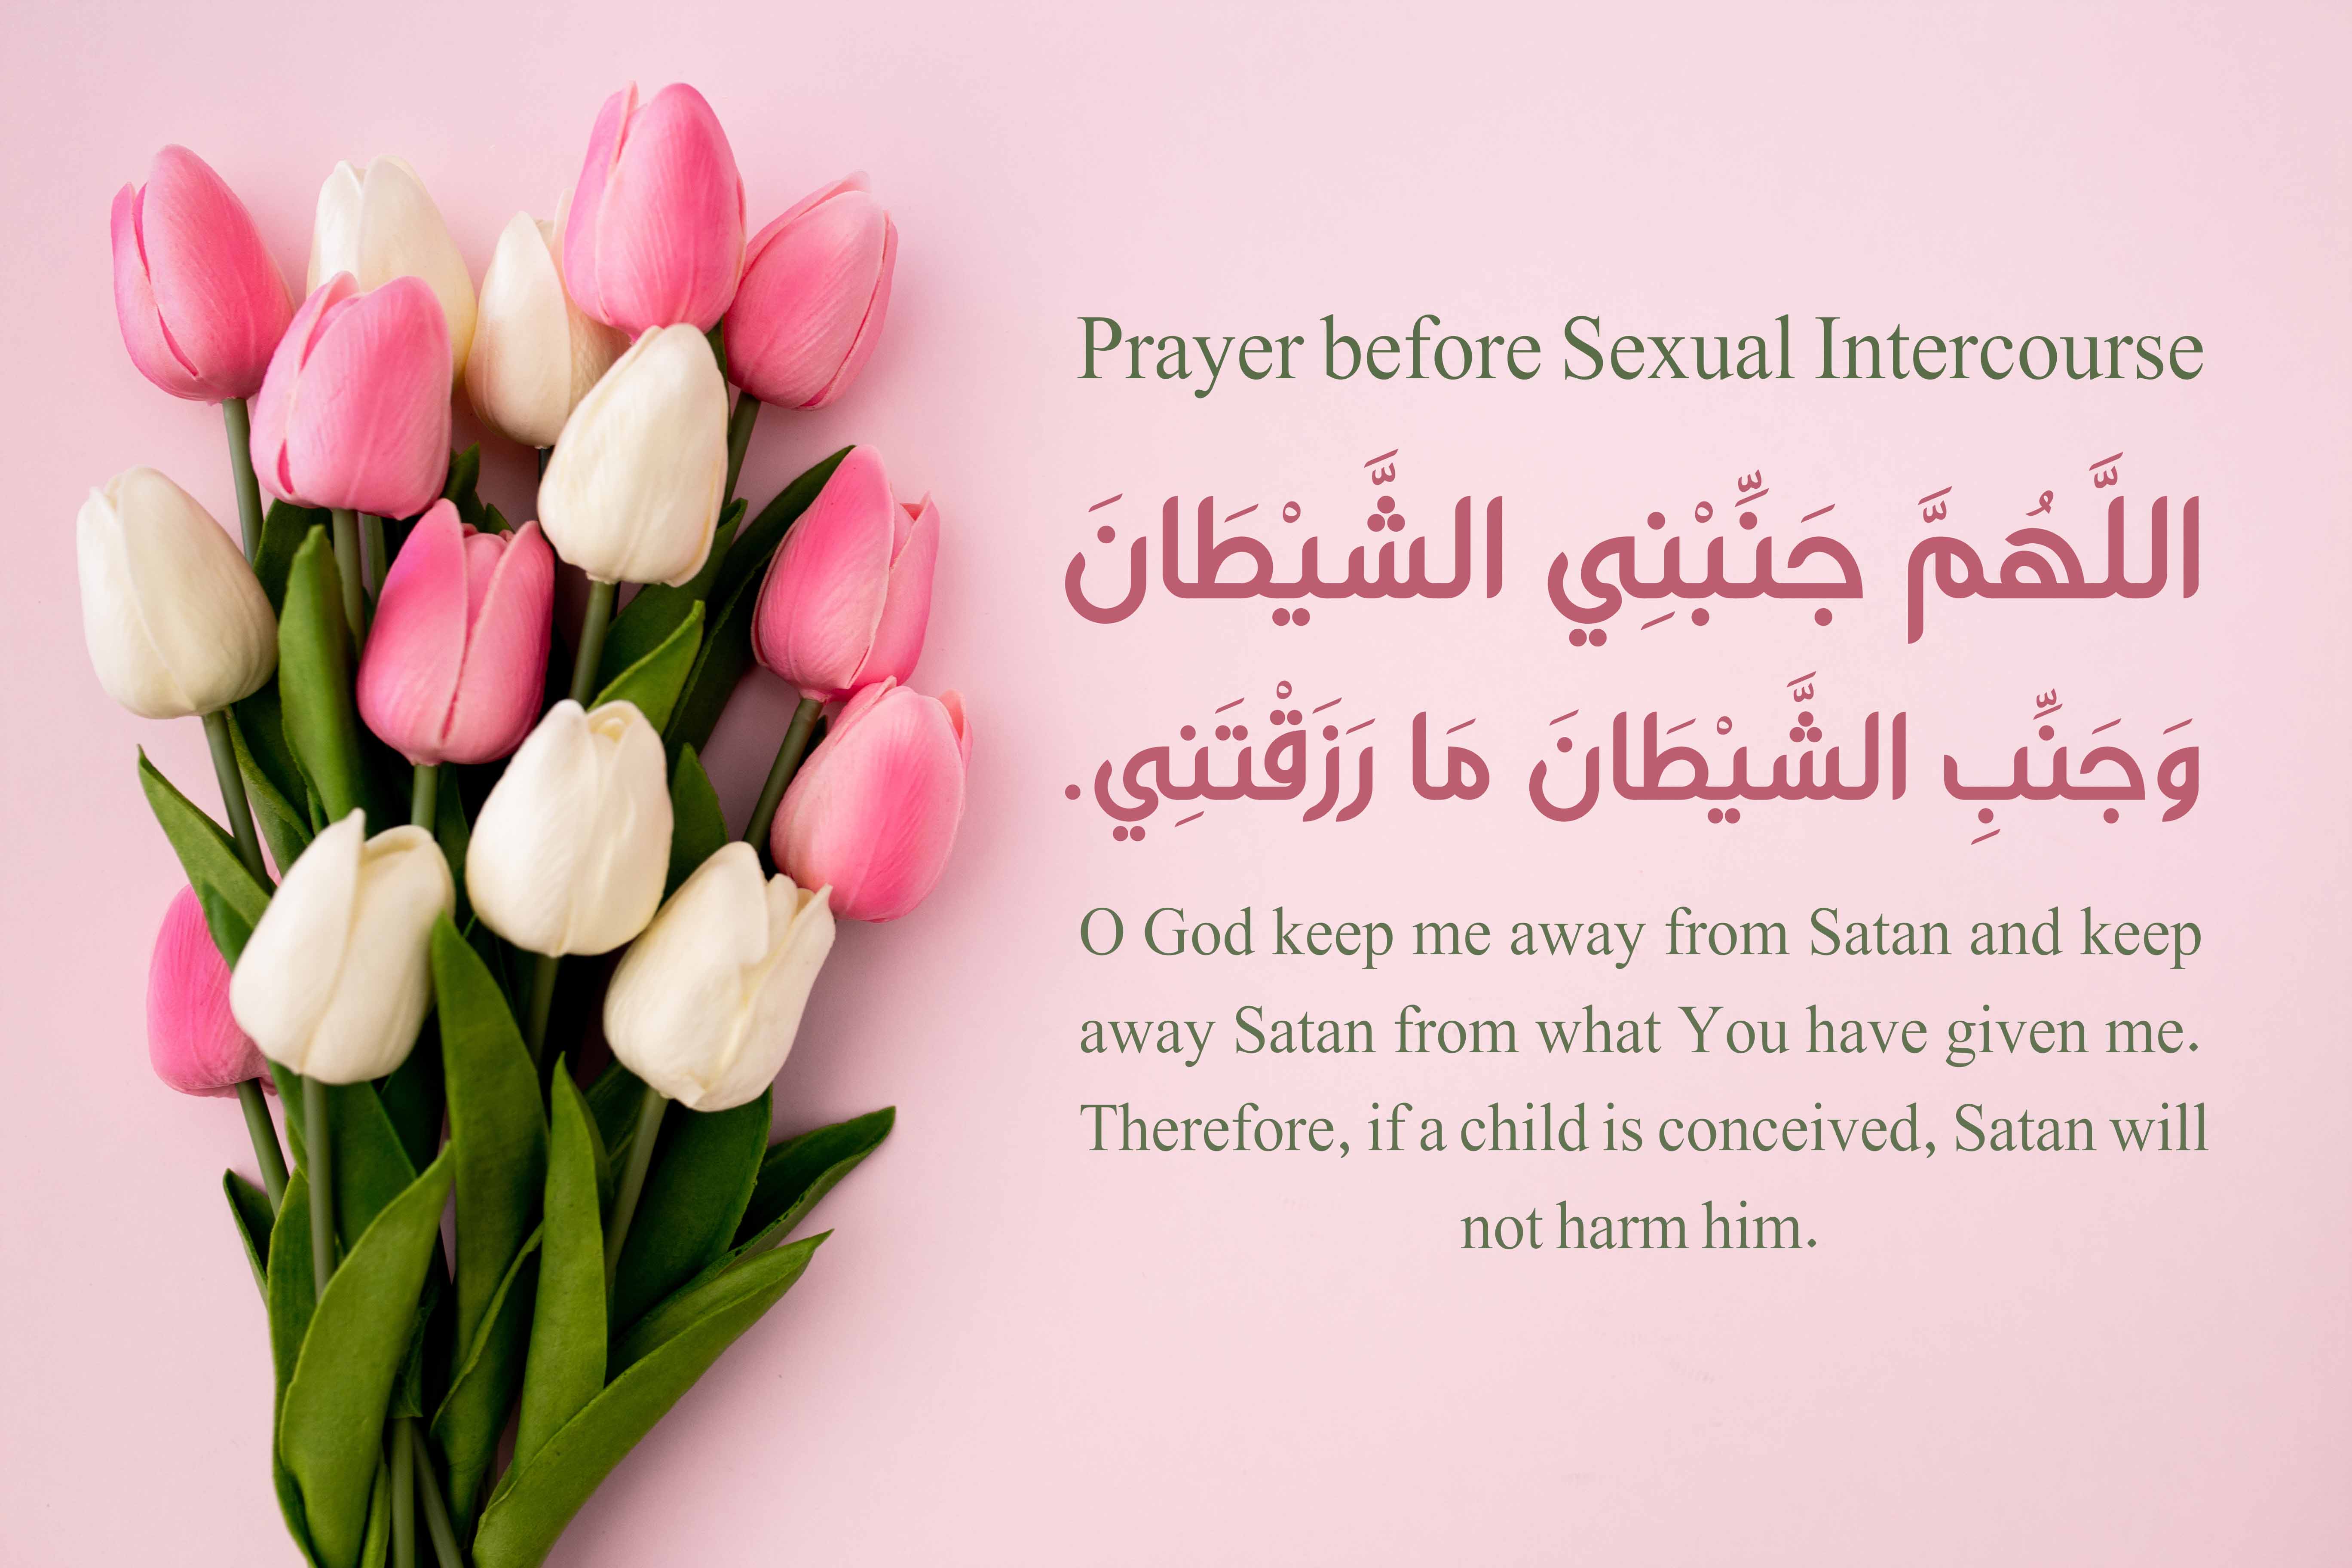 Prayer before Sexual Intercourse